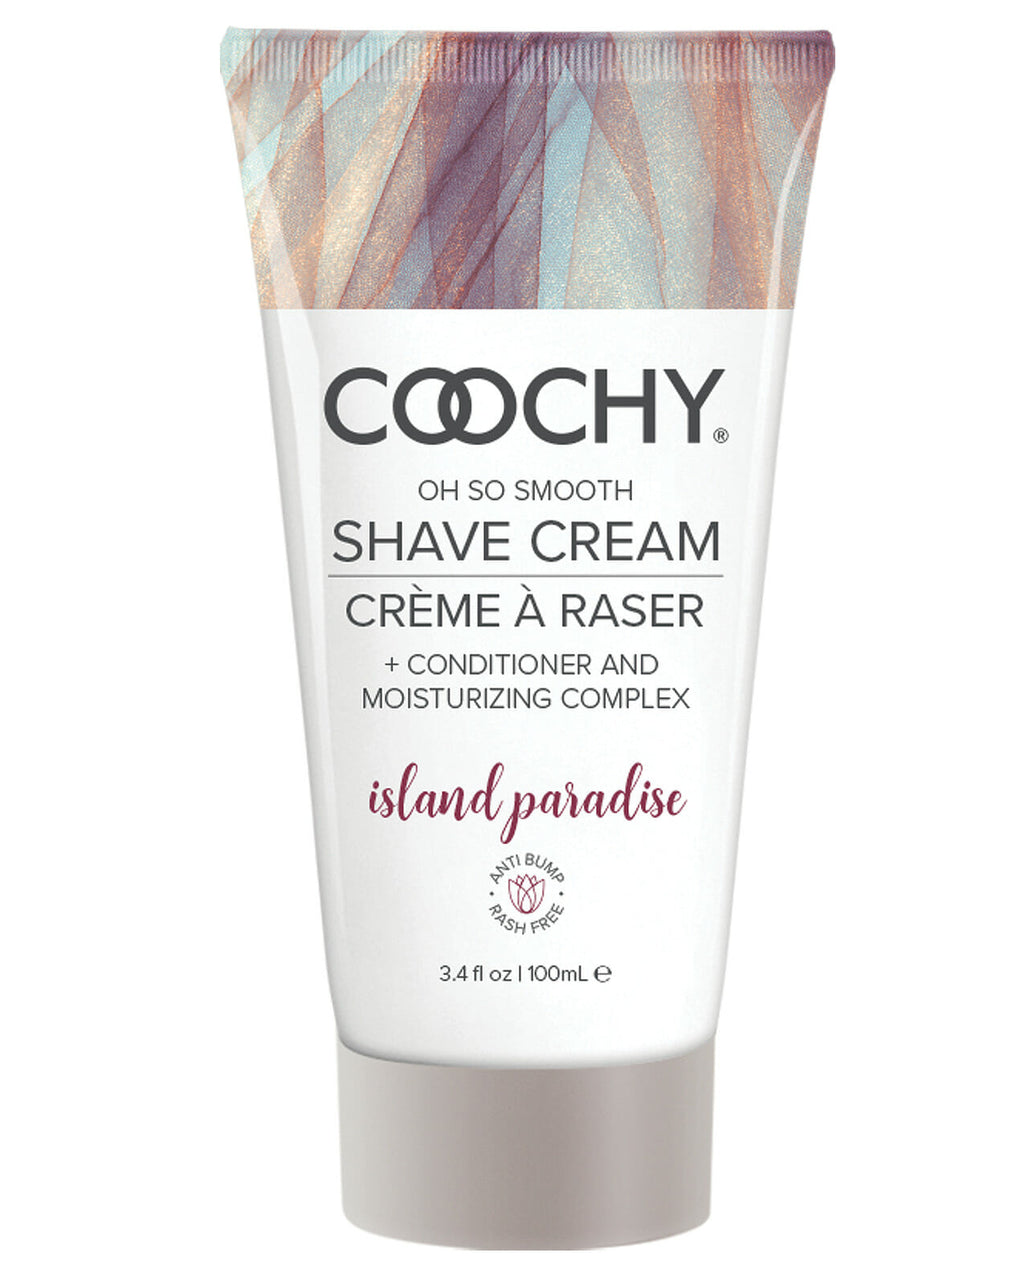 COOCHY Oh So Smooth Shave Cream Island Paradise - 3.4 oz